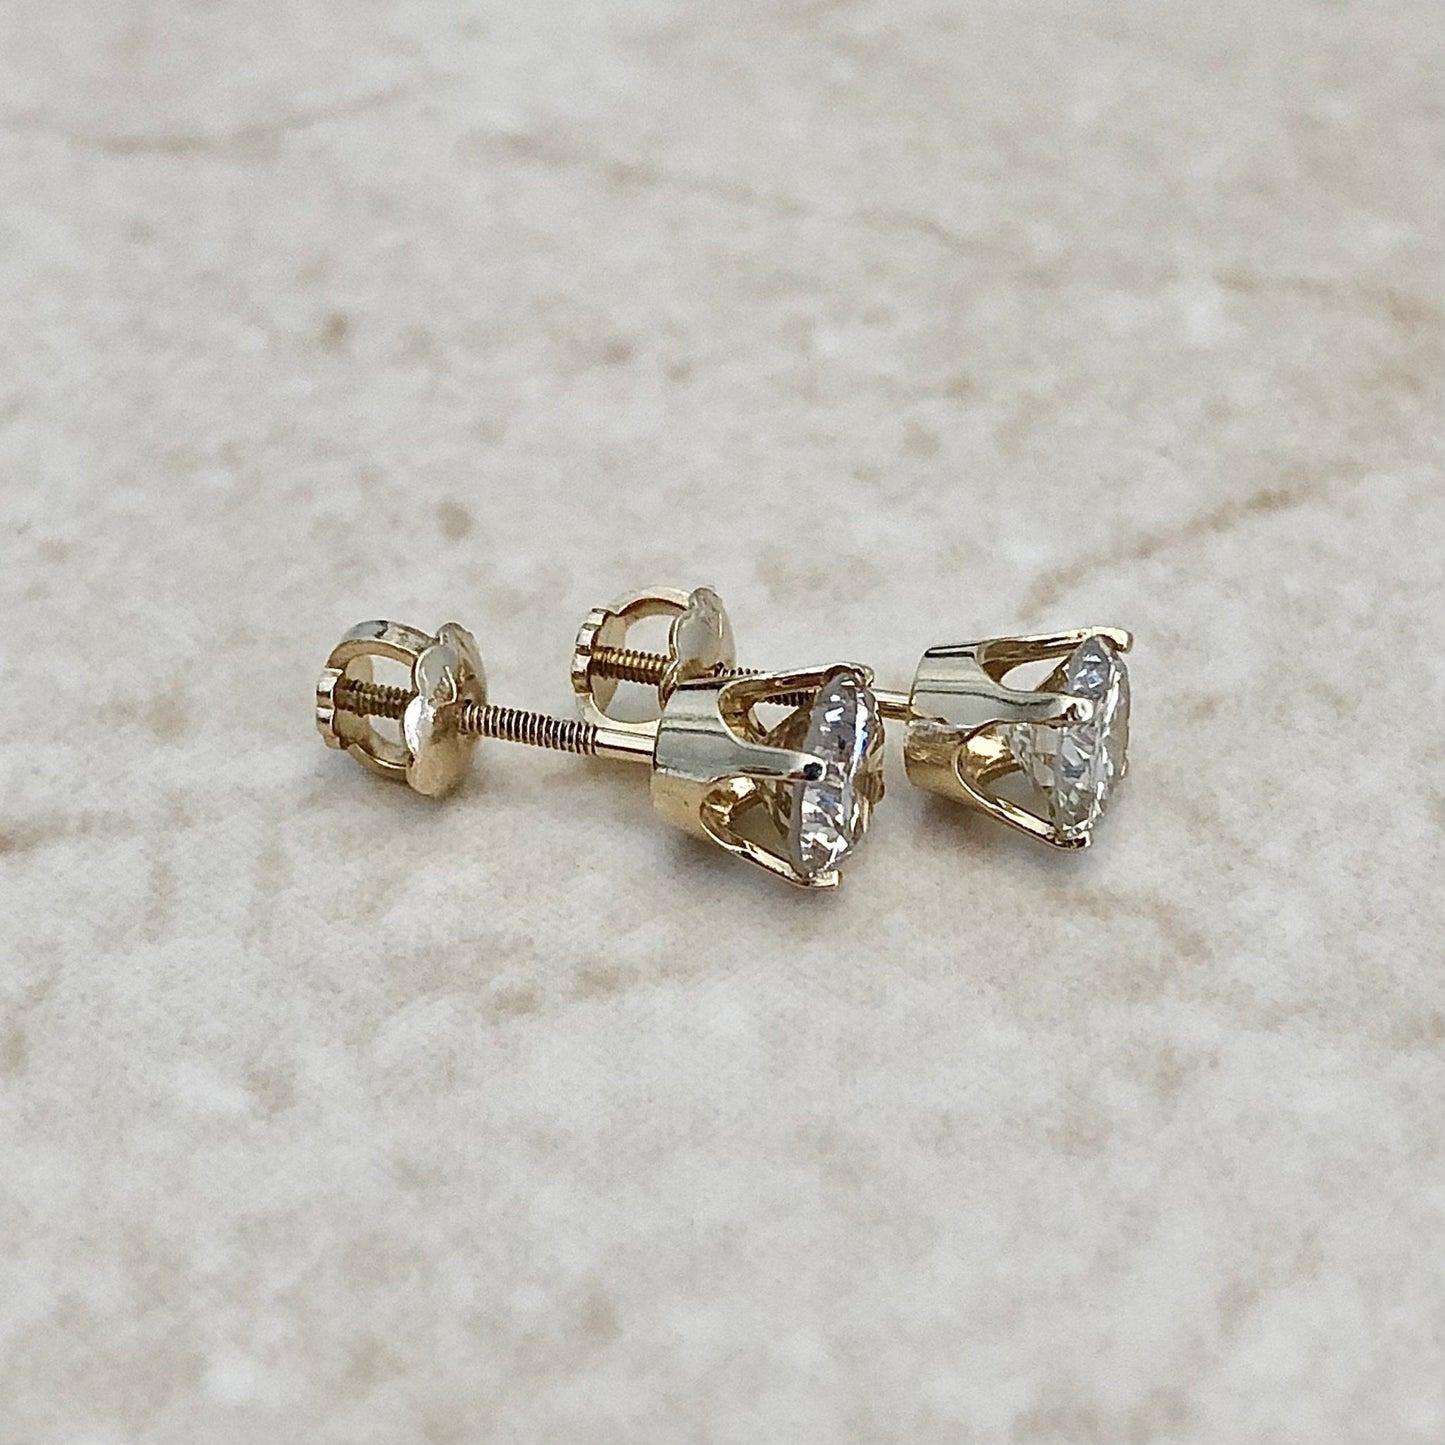 Round Diamond Stud Earrings 1.05 CTTW - Genuine Diamonds - 14 Karat Yellow Gold